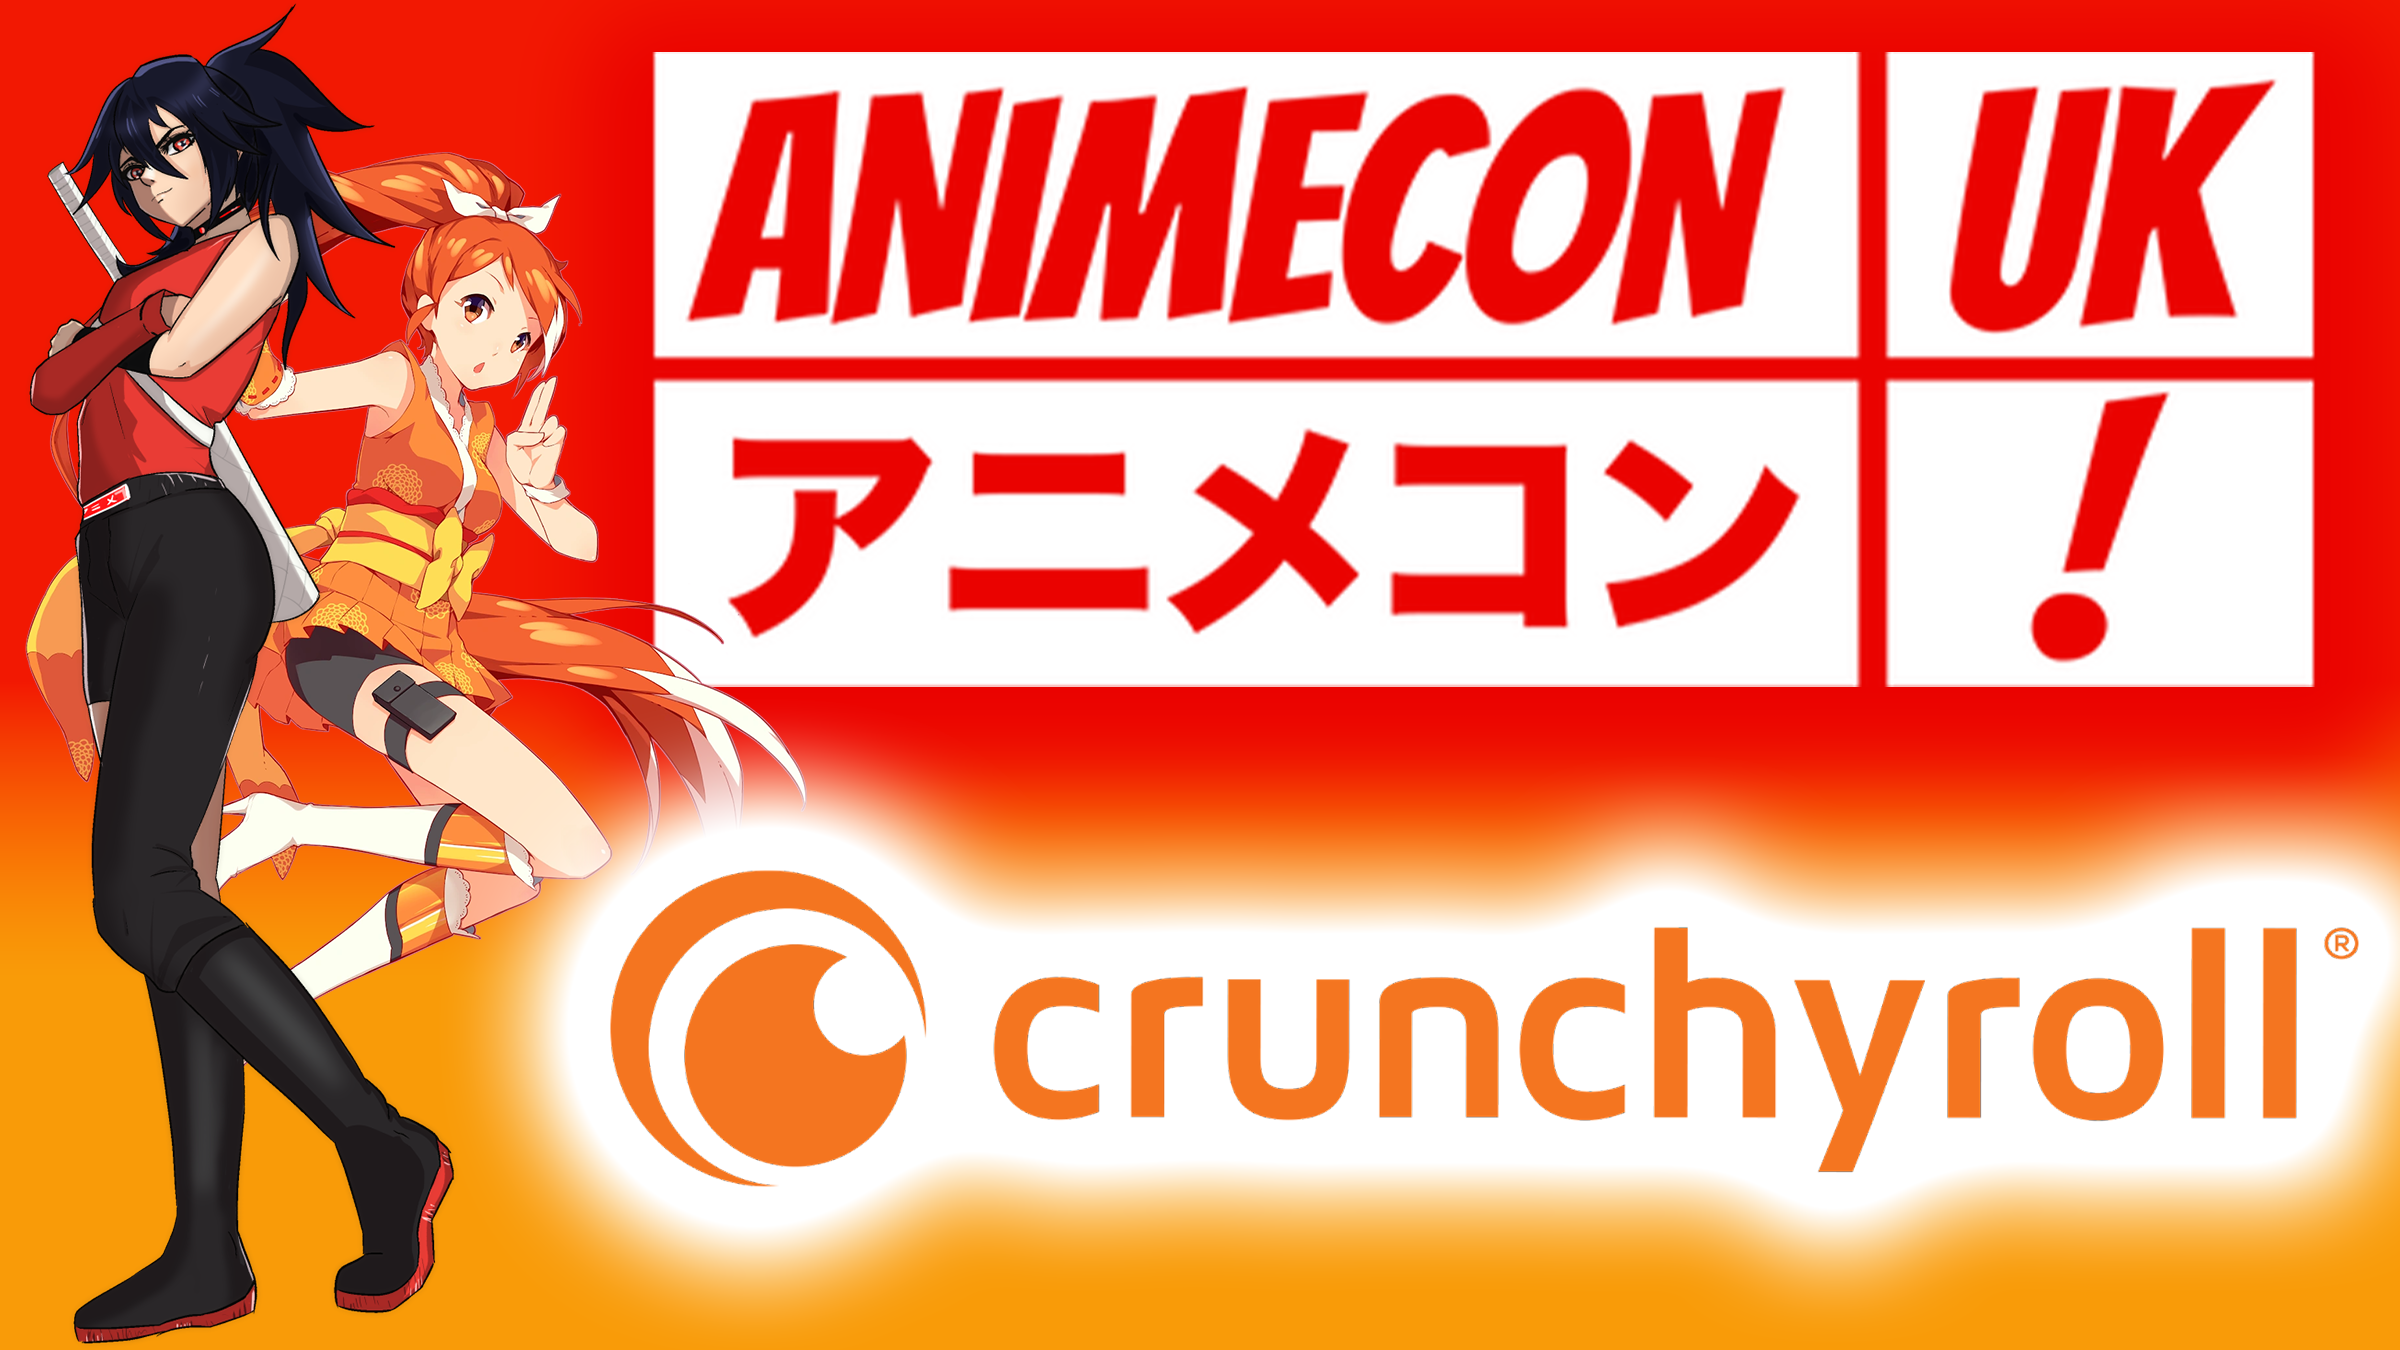 Crunchyroll Establishes Exciting Partnership with AnimeConUK